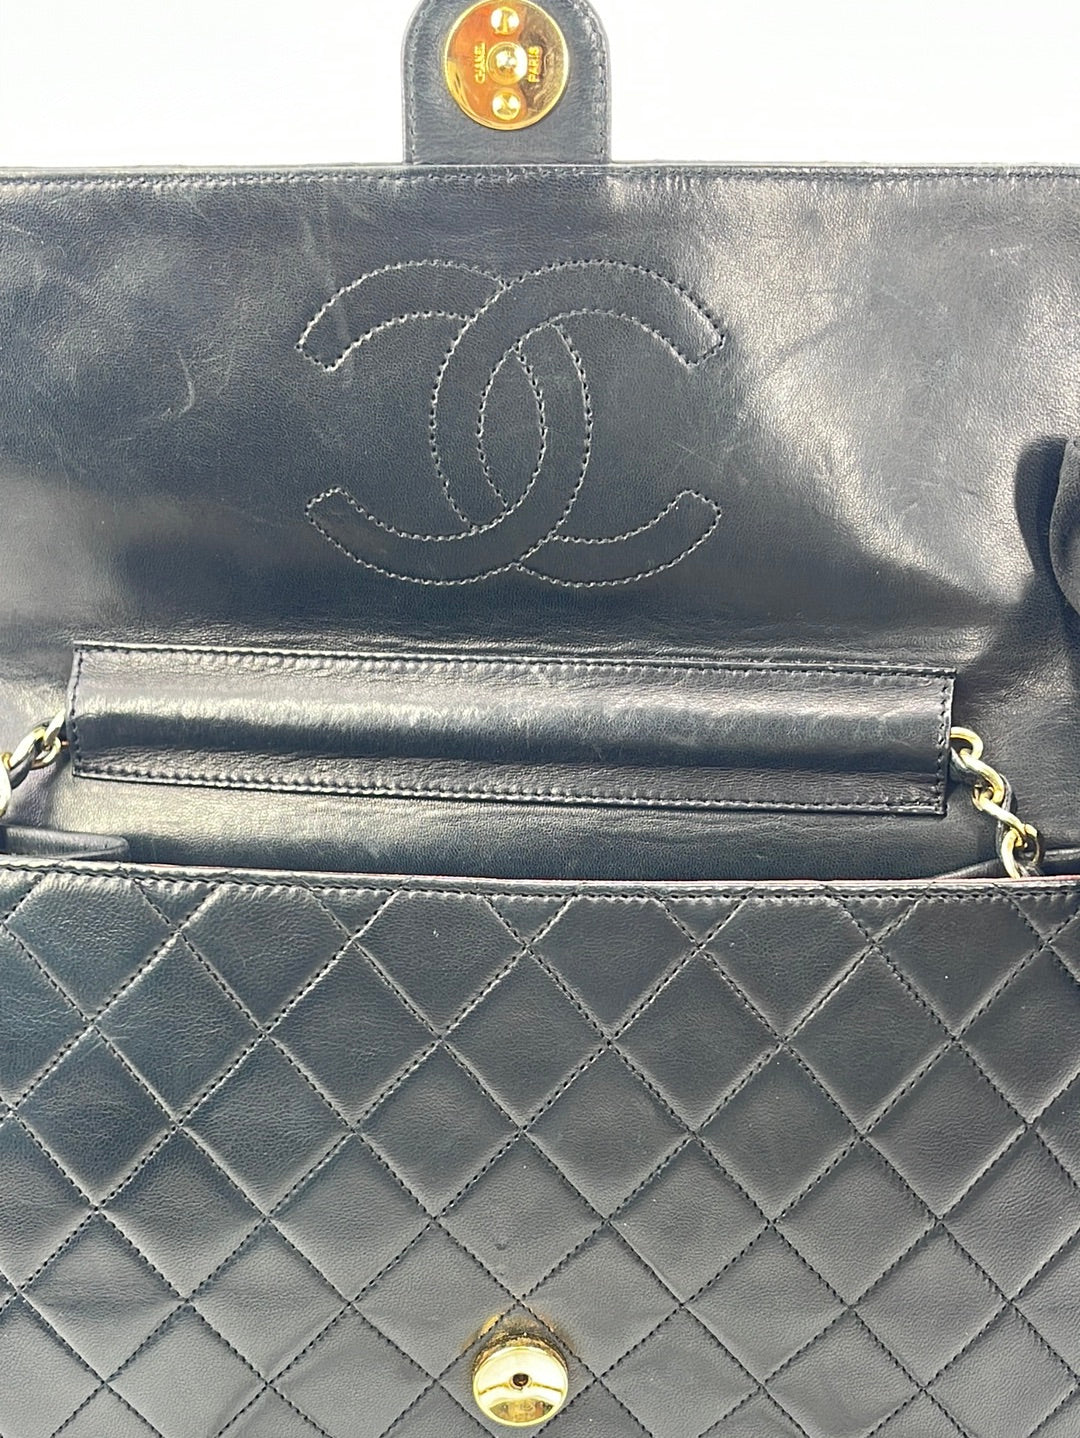 Vintage CHANEL Black Lambskin Classic Flap Bag 147902 040823